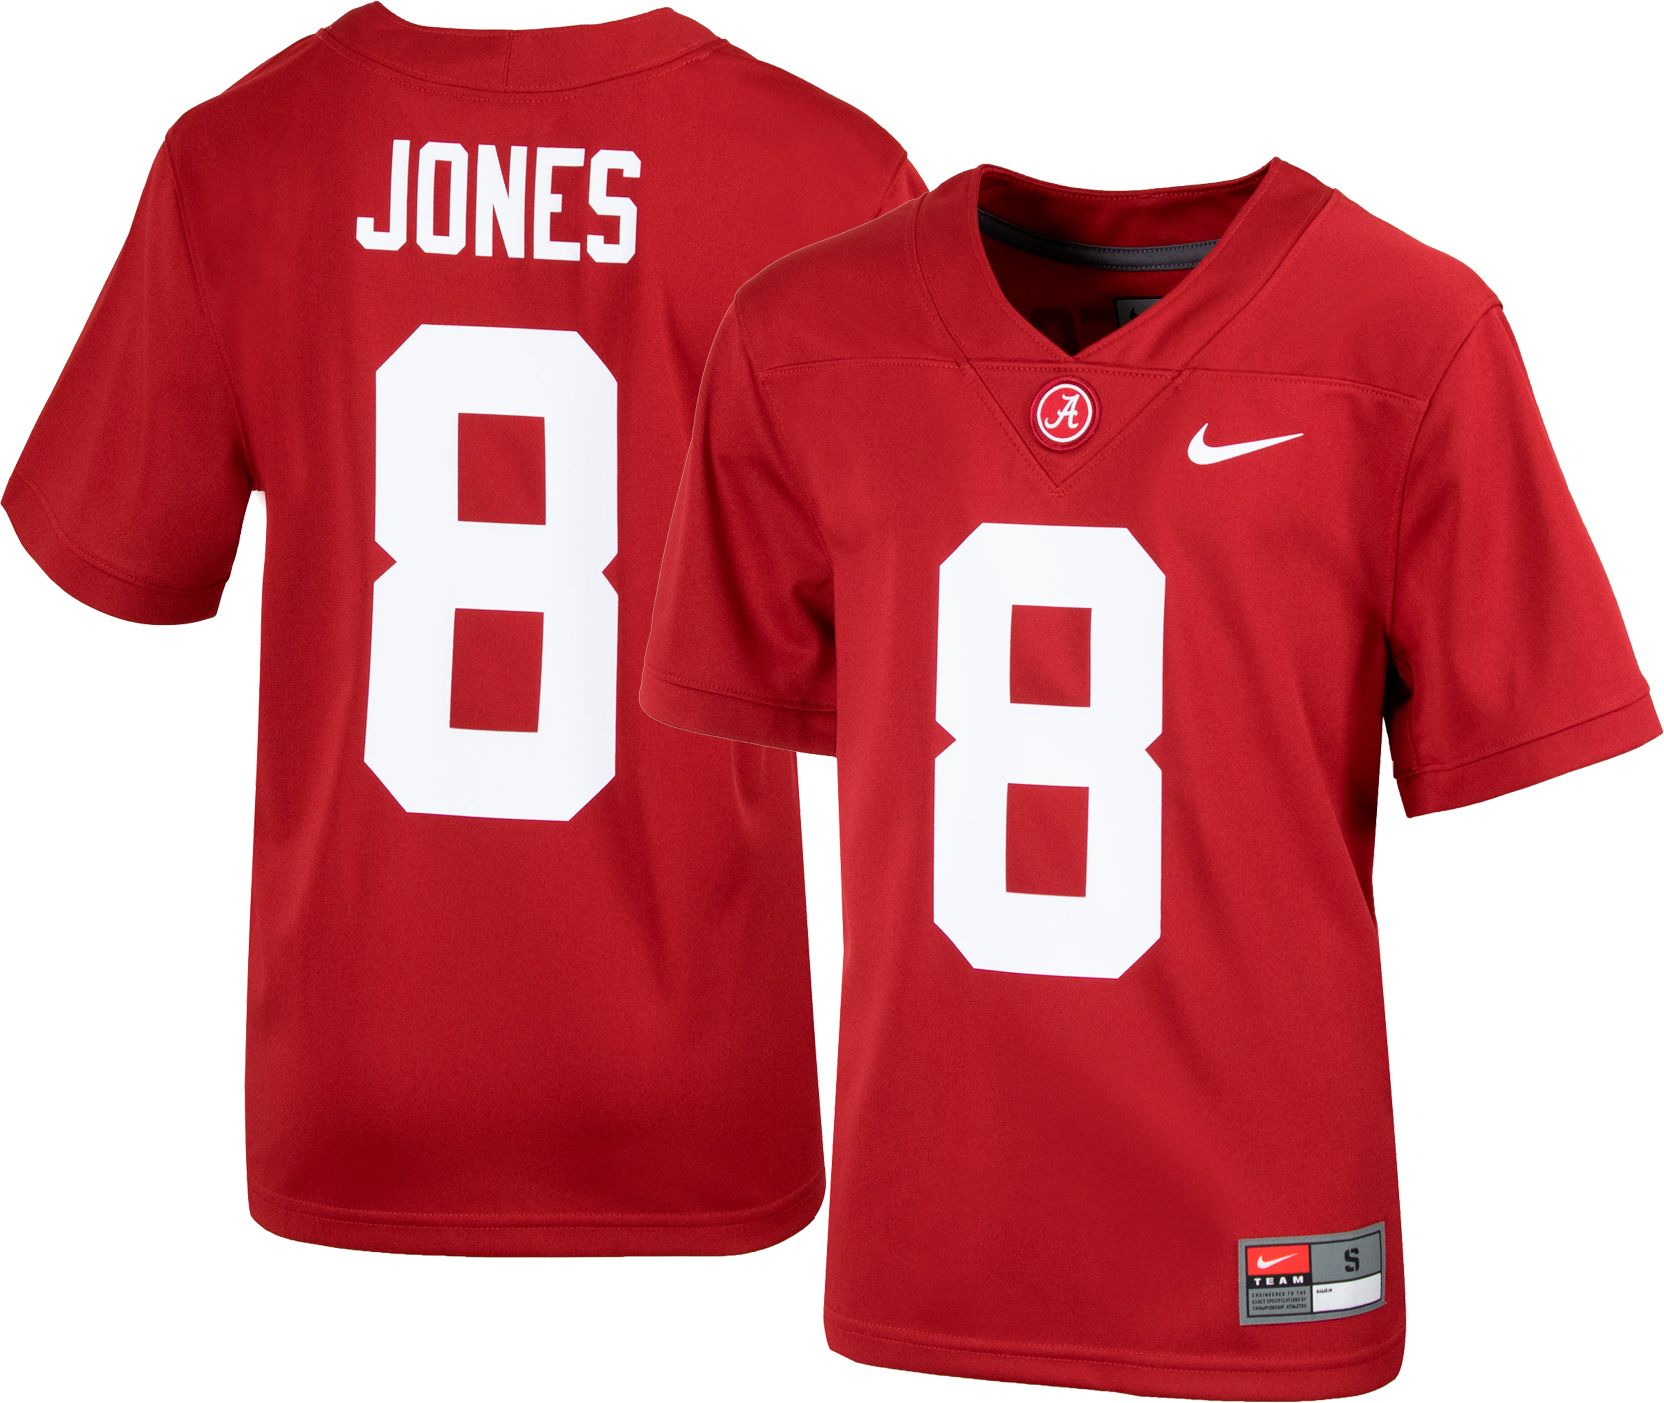 Julio Jones Crimson Tide football jersey